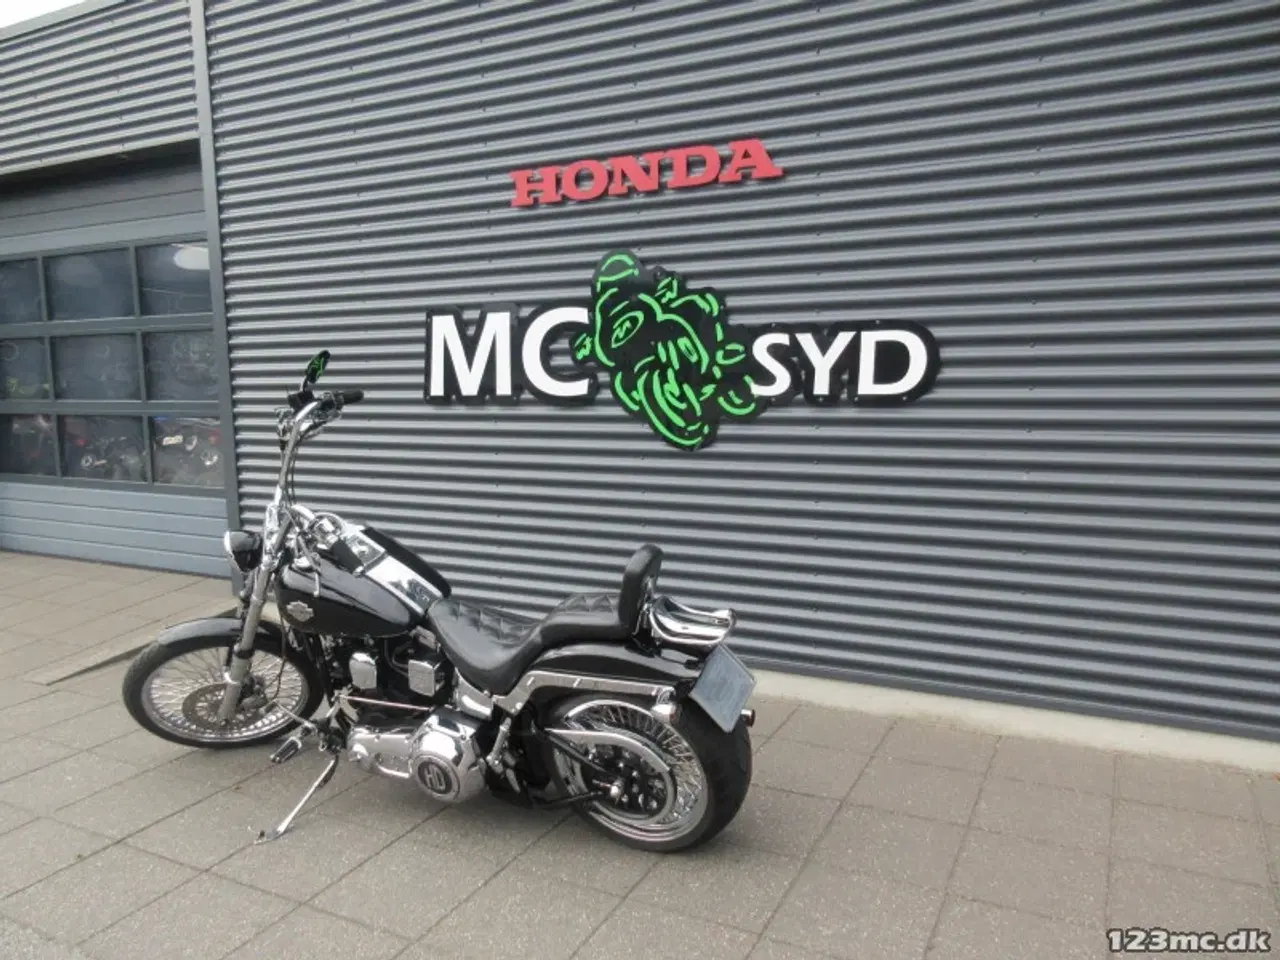 Billede 15 - Harley-Davidson FXSTC Softail Custom MC-SYD ENGROS /Bytter gerne